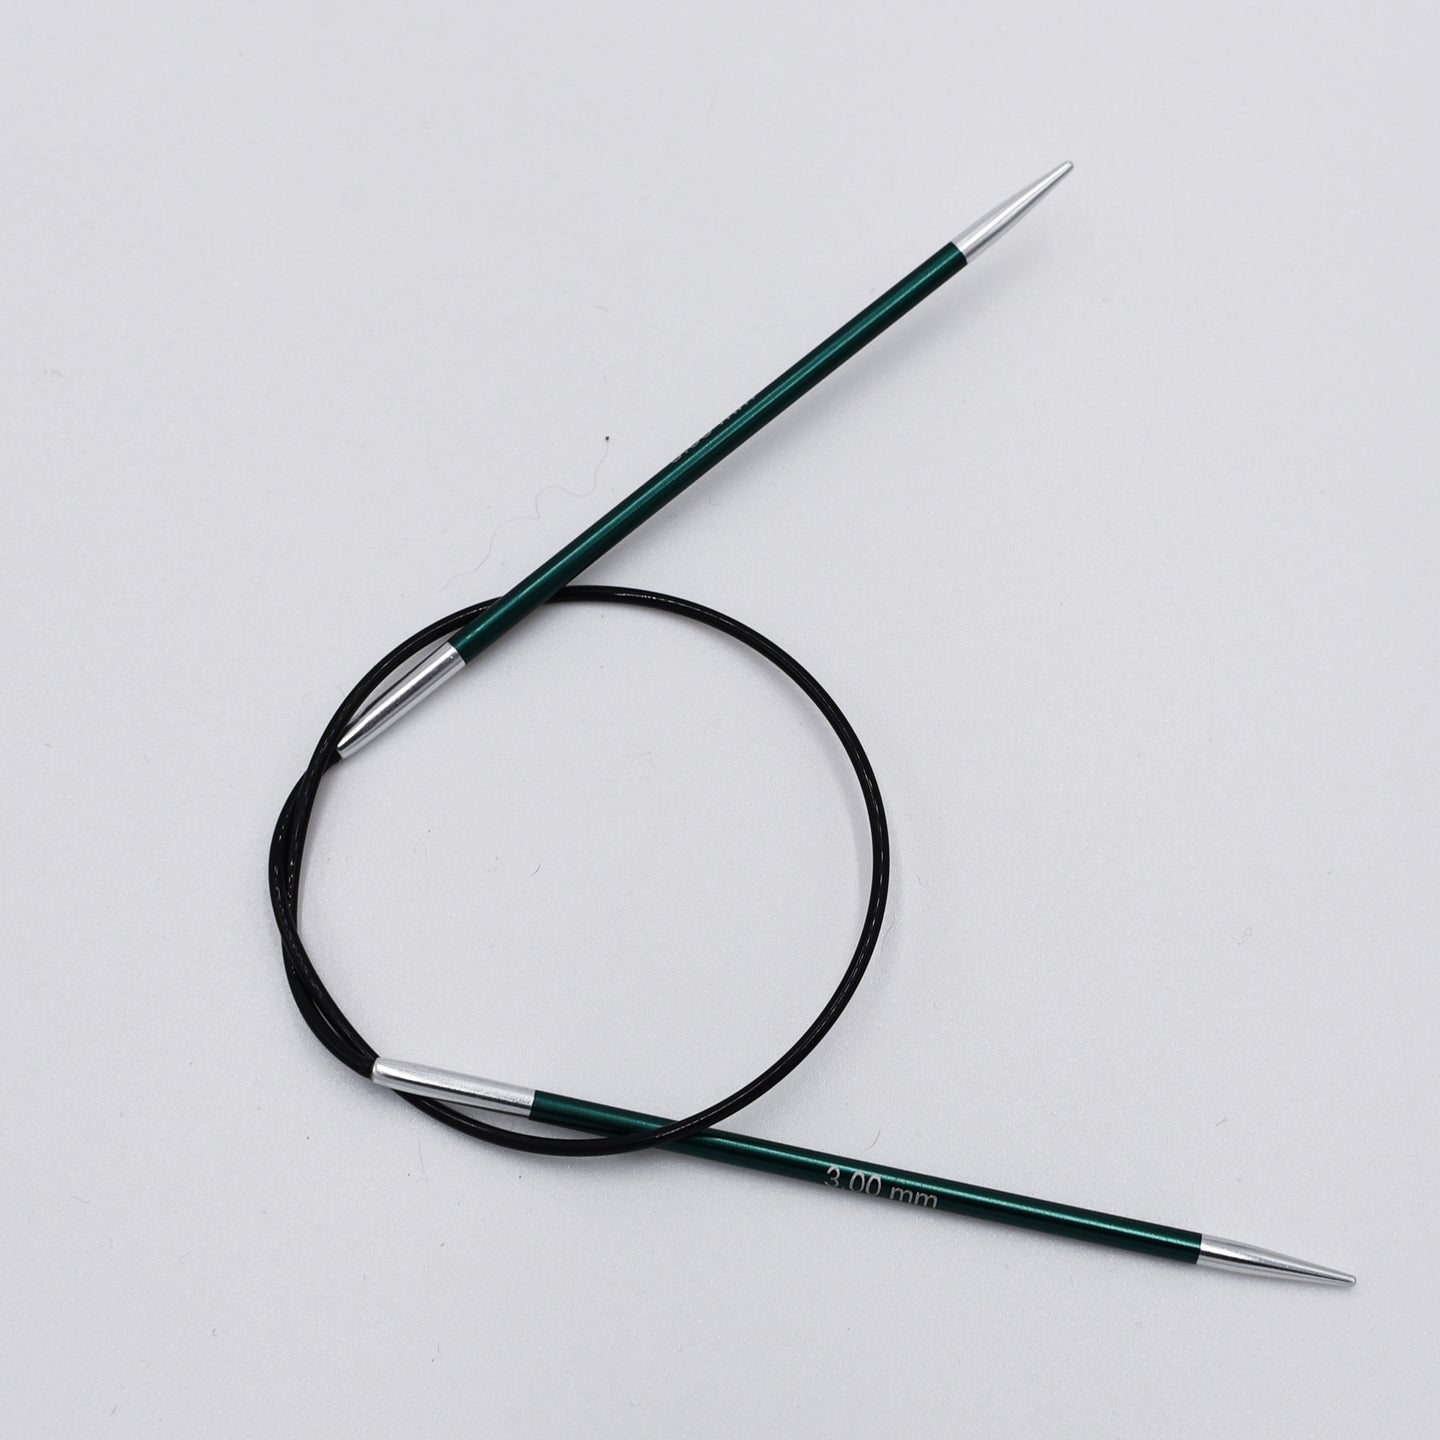 Circular fixed needles - 3.00mm & 40cm